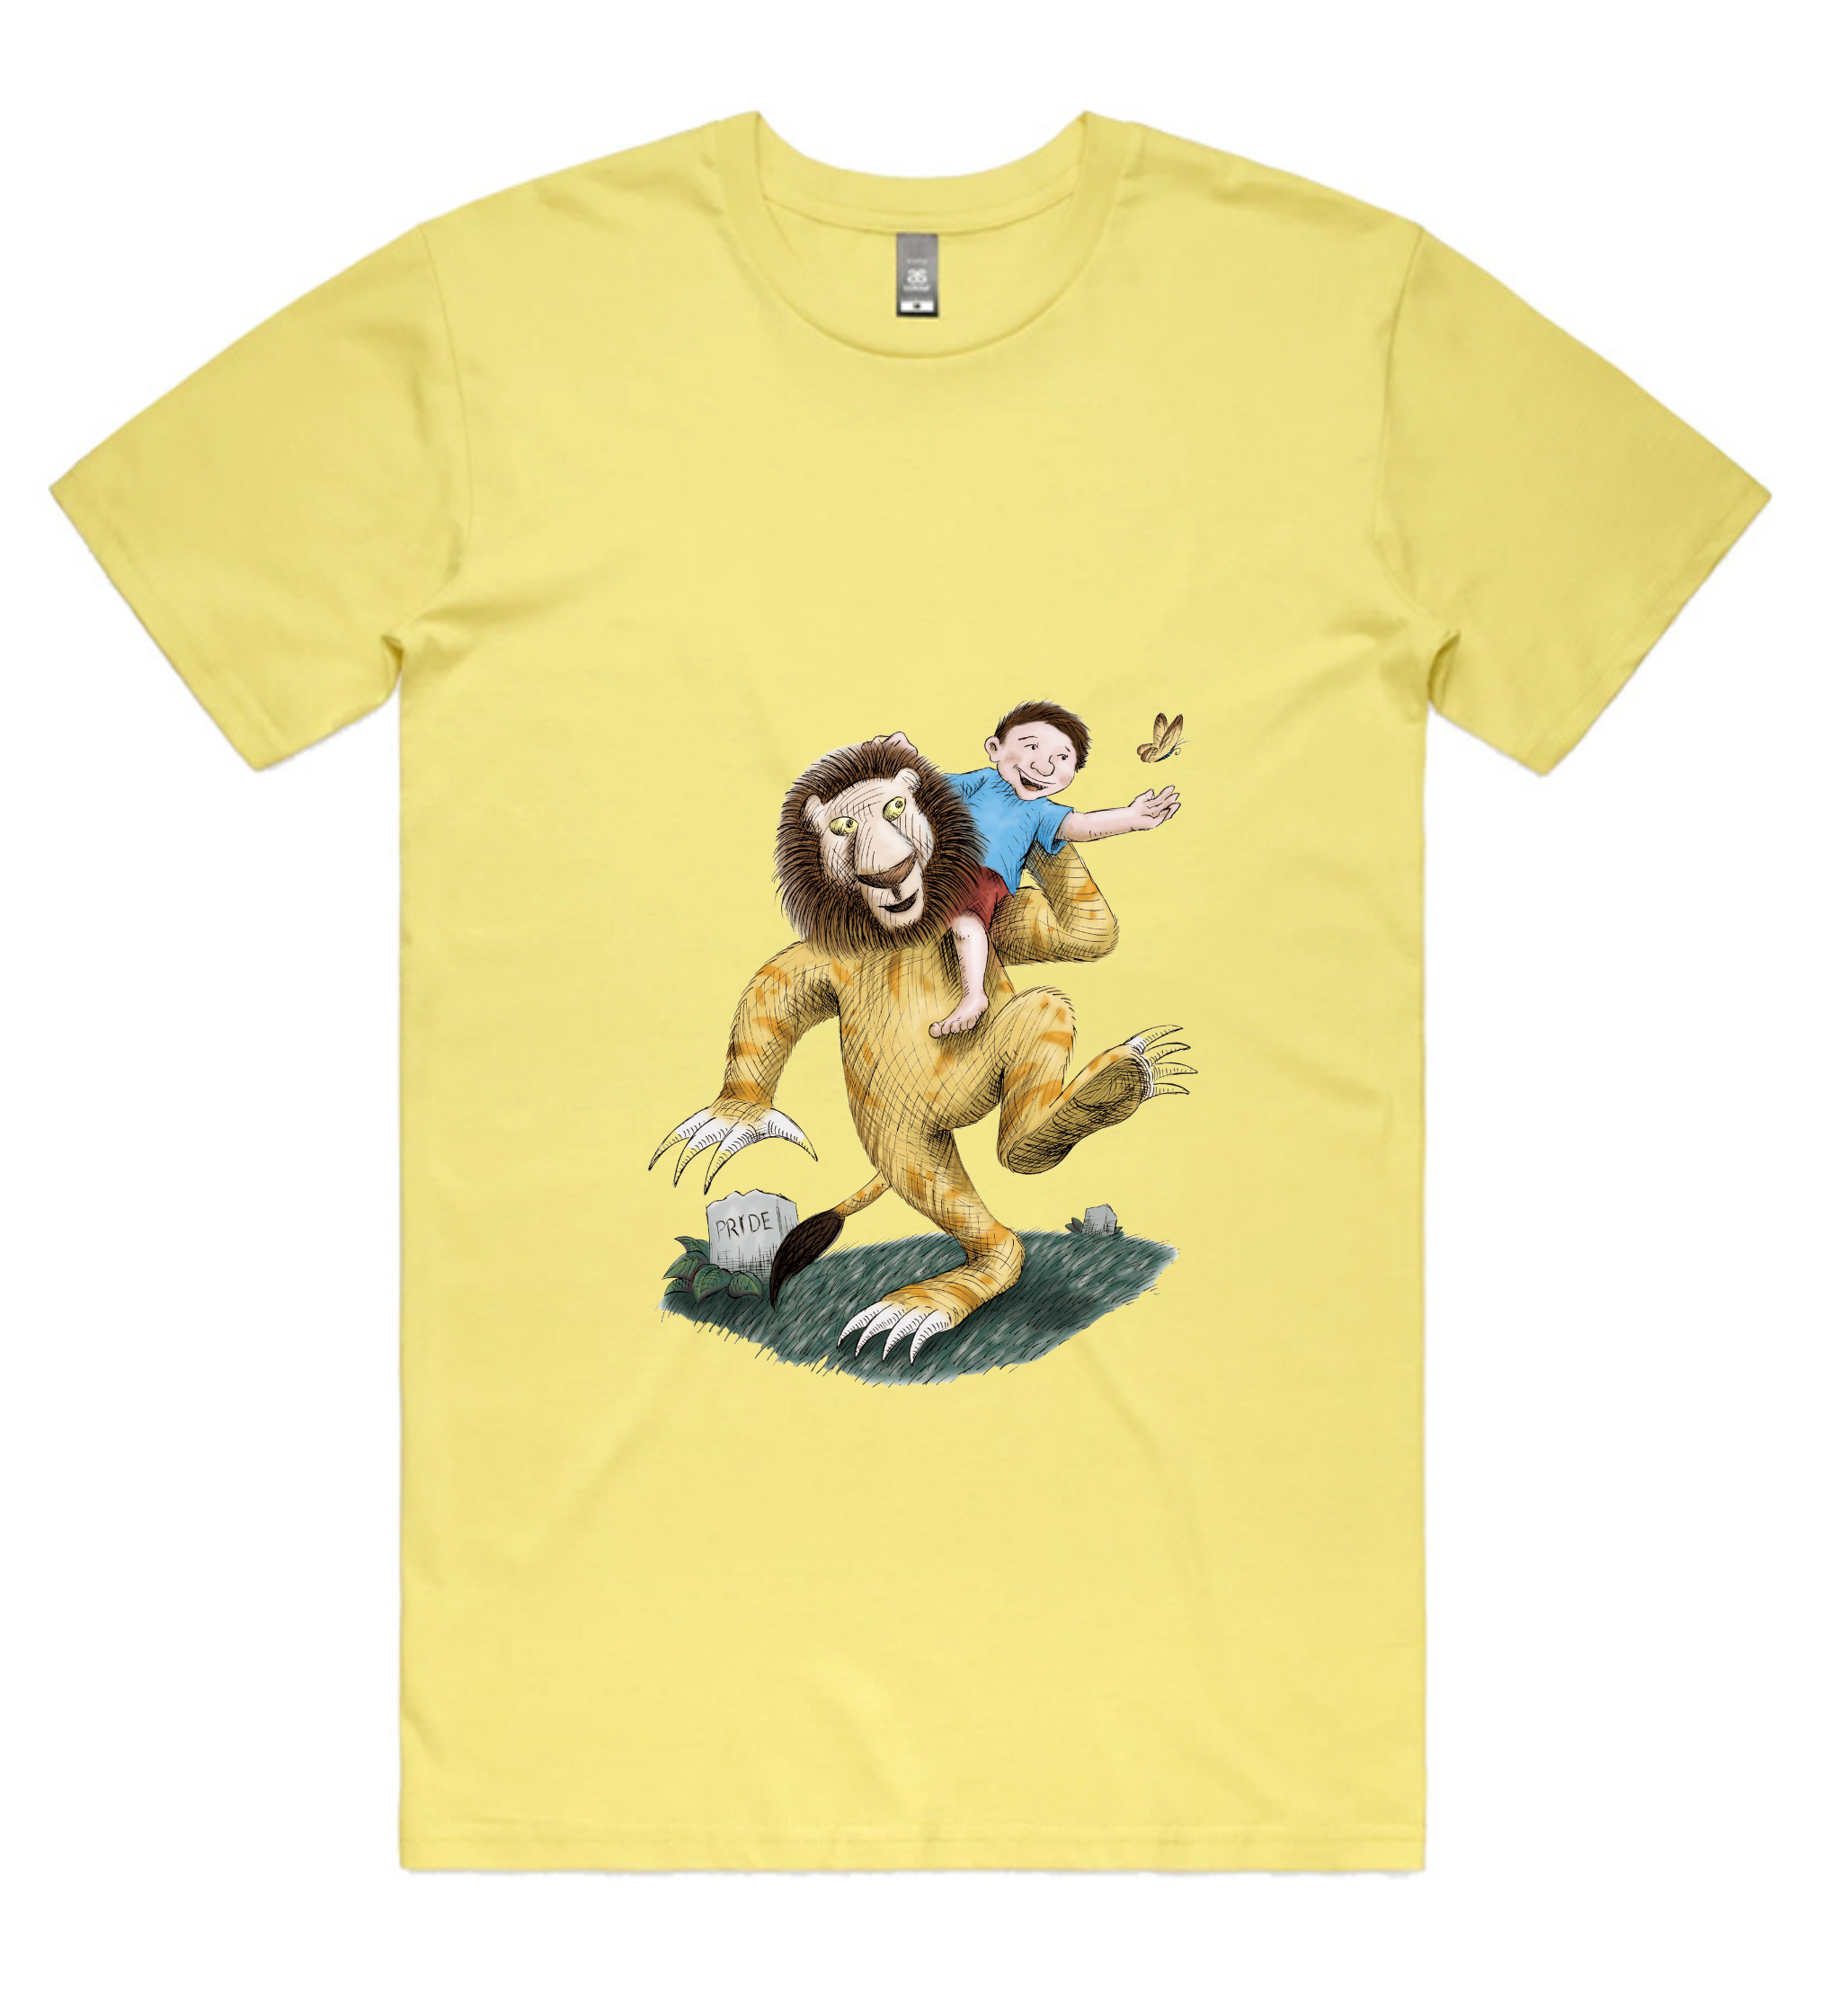 Pride Lands Clothing Design on yellow shirt